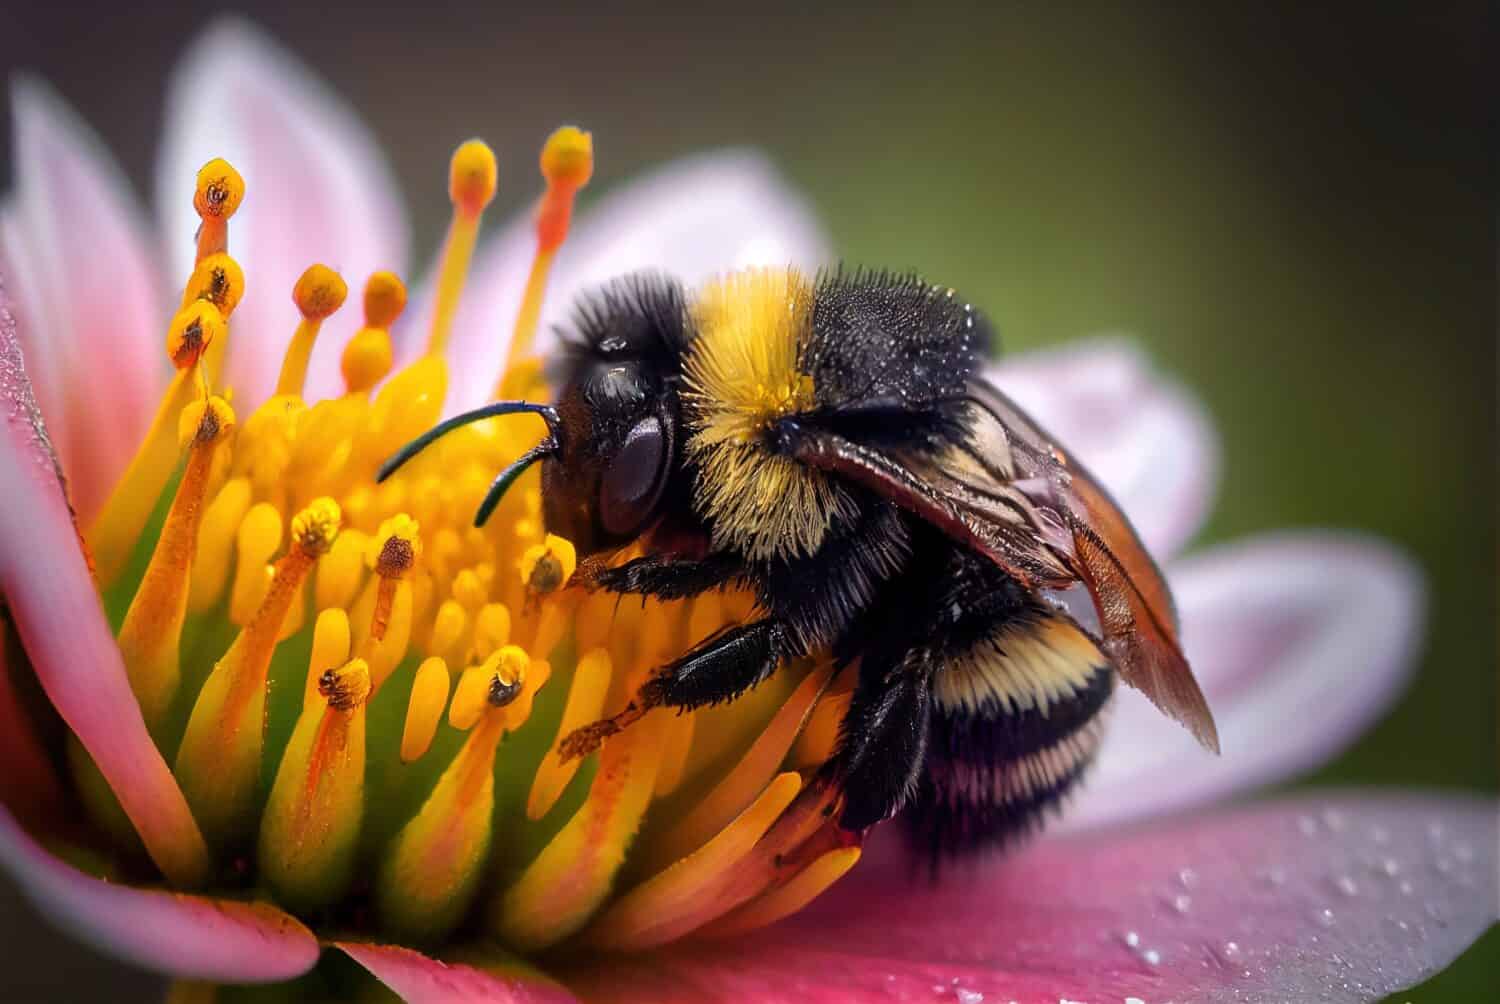 Harmless wild animal in Canada: Bumblebee on a flower macro. 